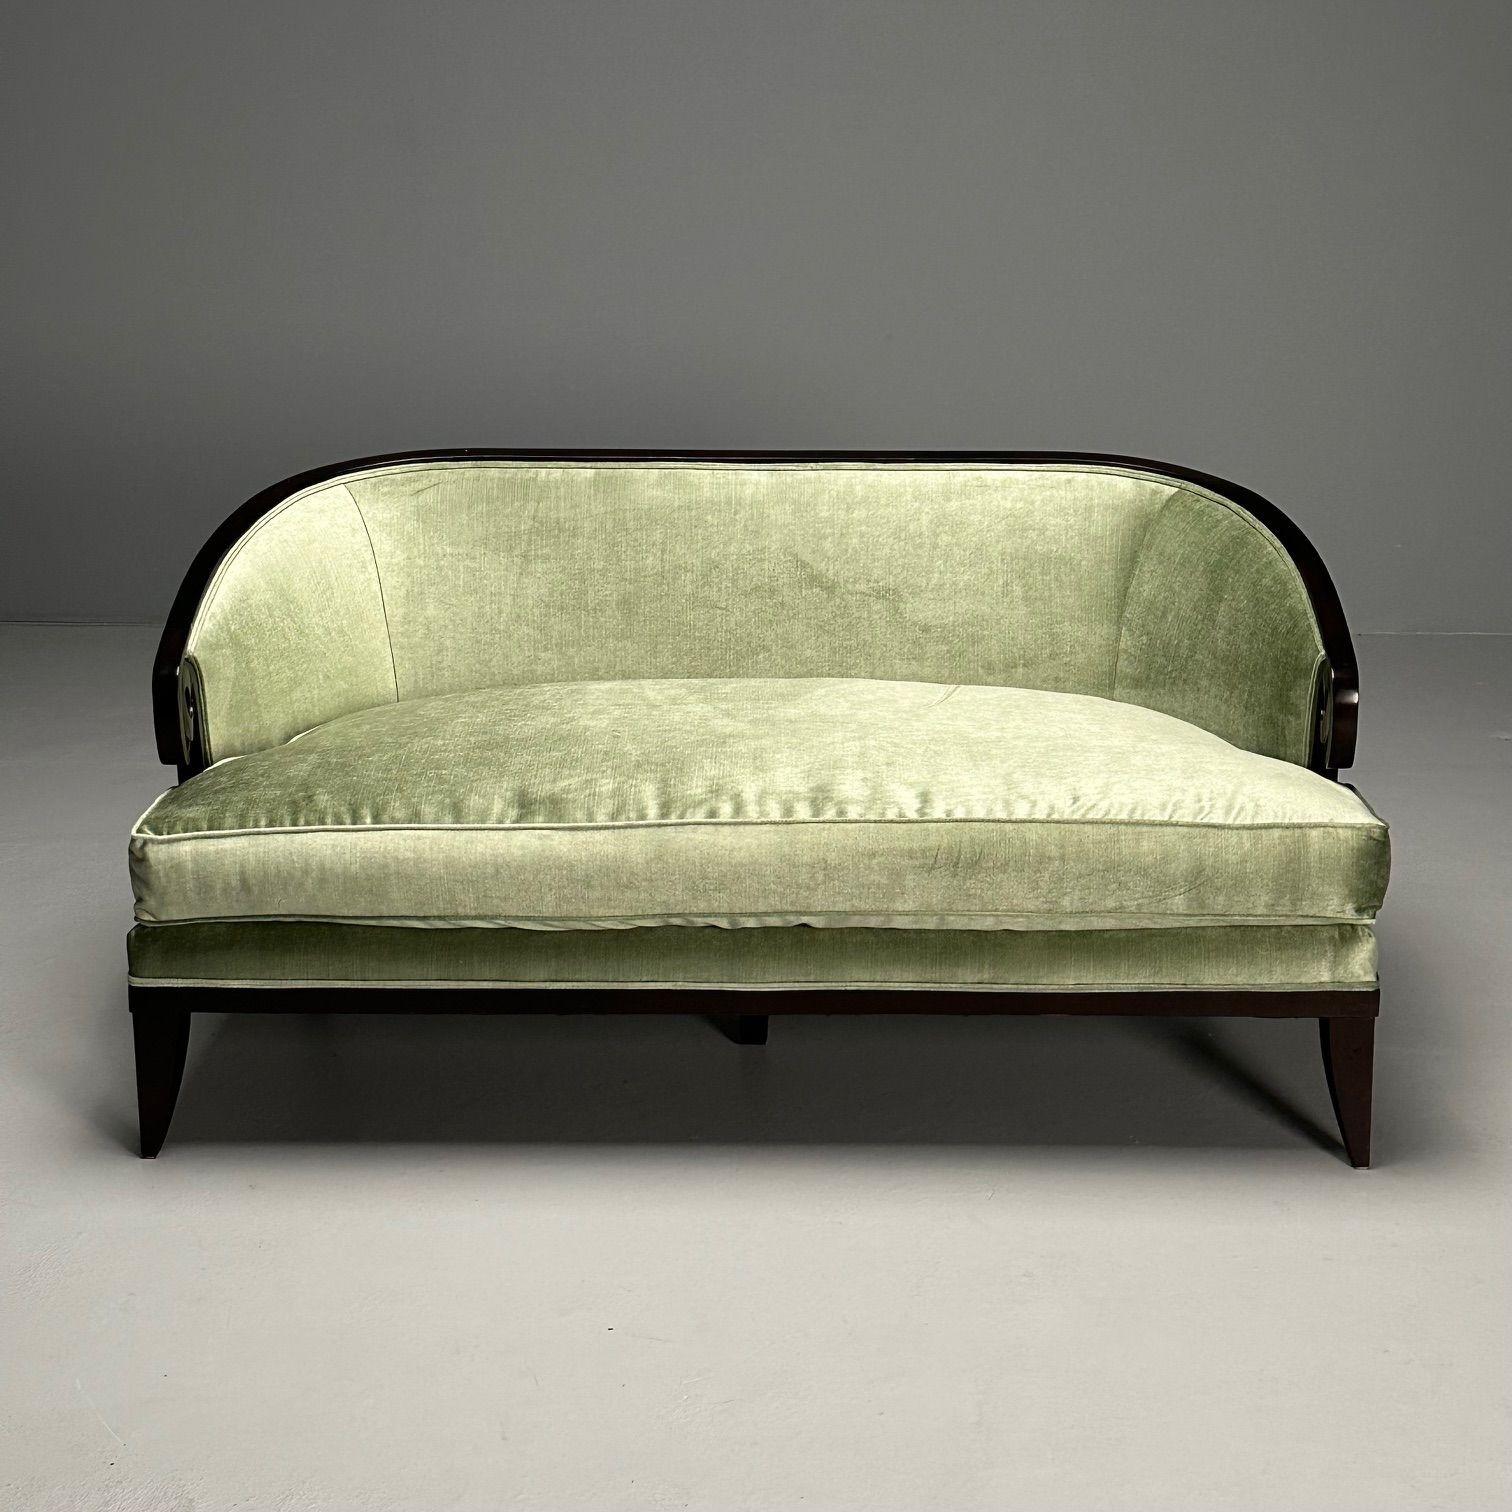 Américain Christopher Guy, Contemporary, Modern Sofa, Mint Green Velvet, Black Wood